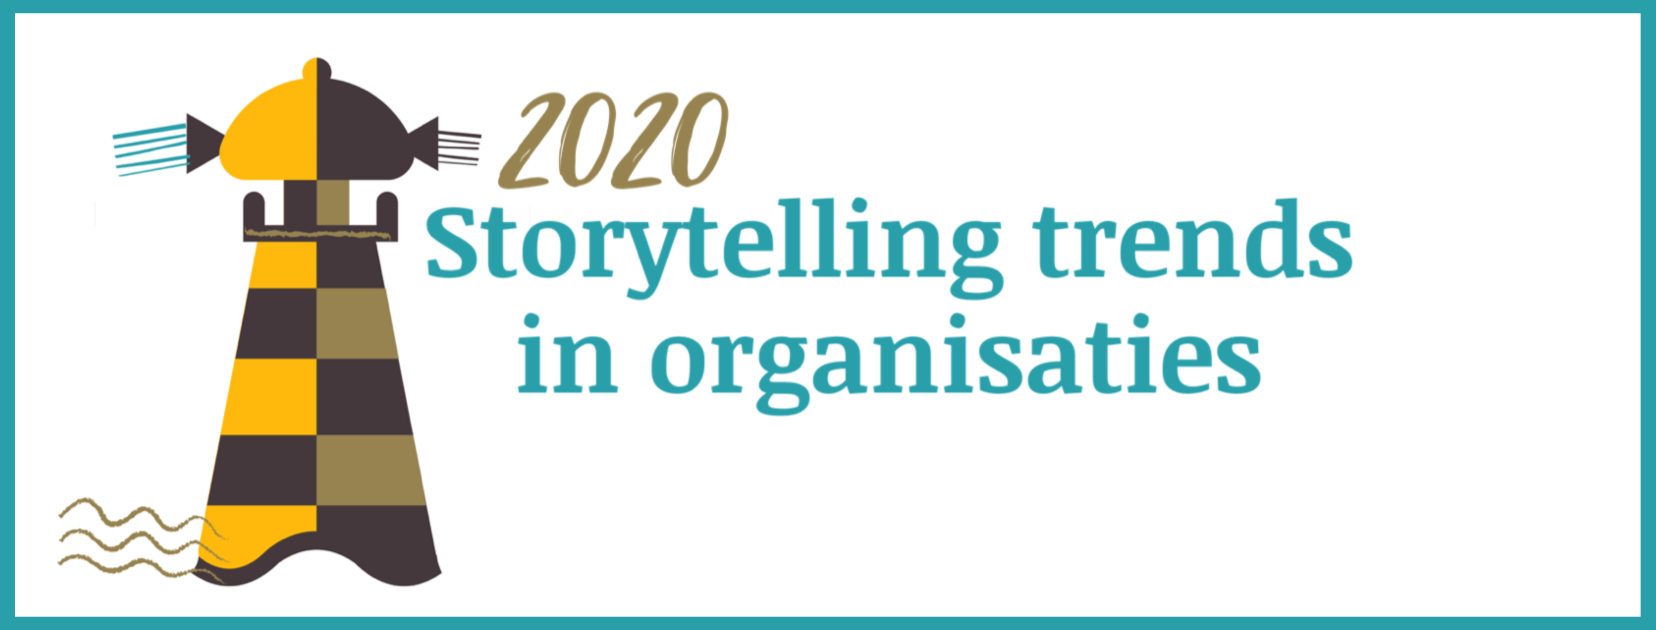 Storytelling trends in 2020